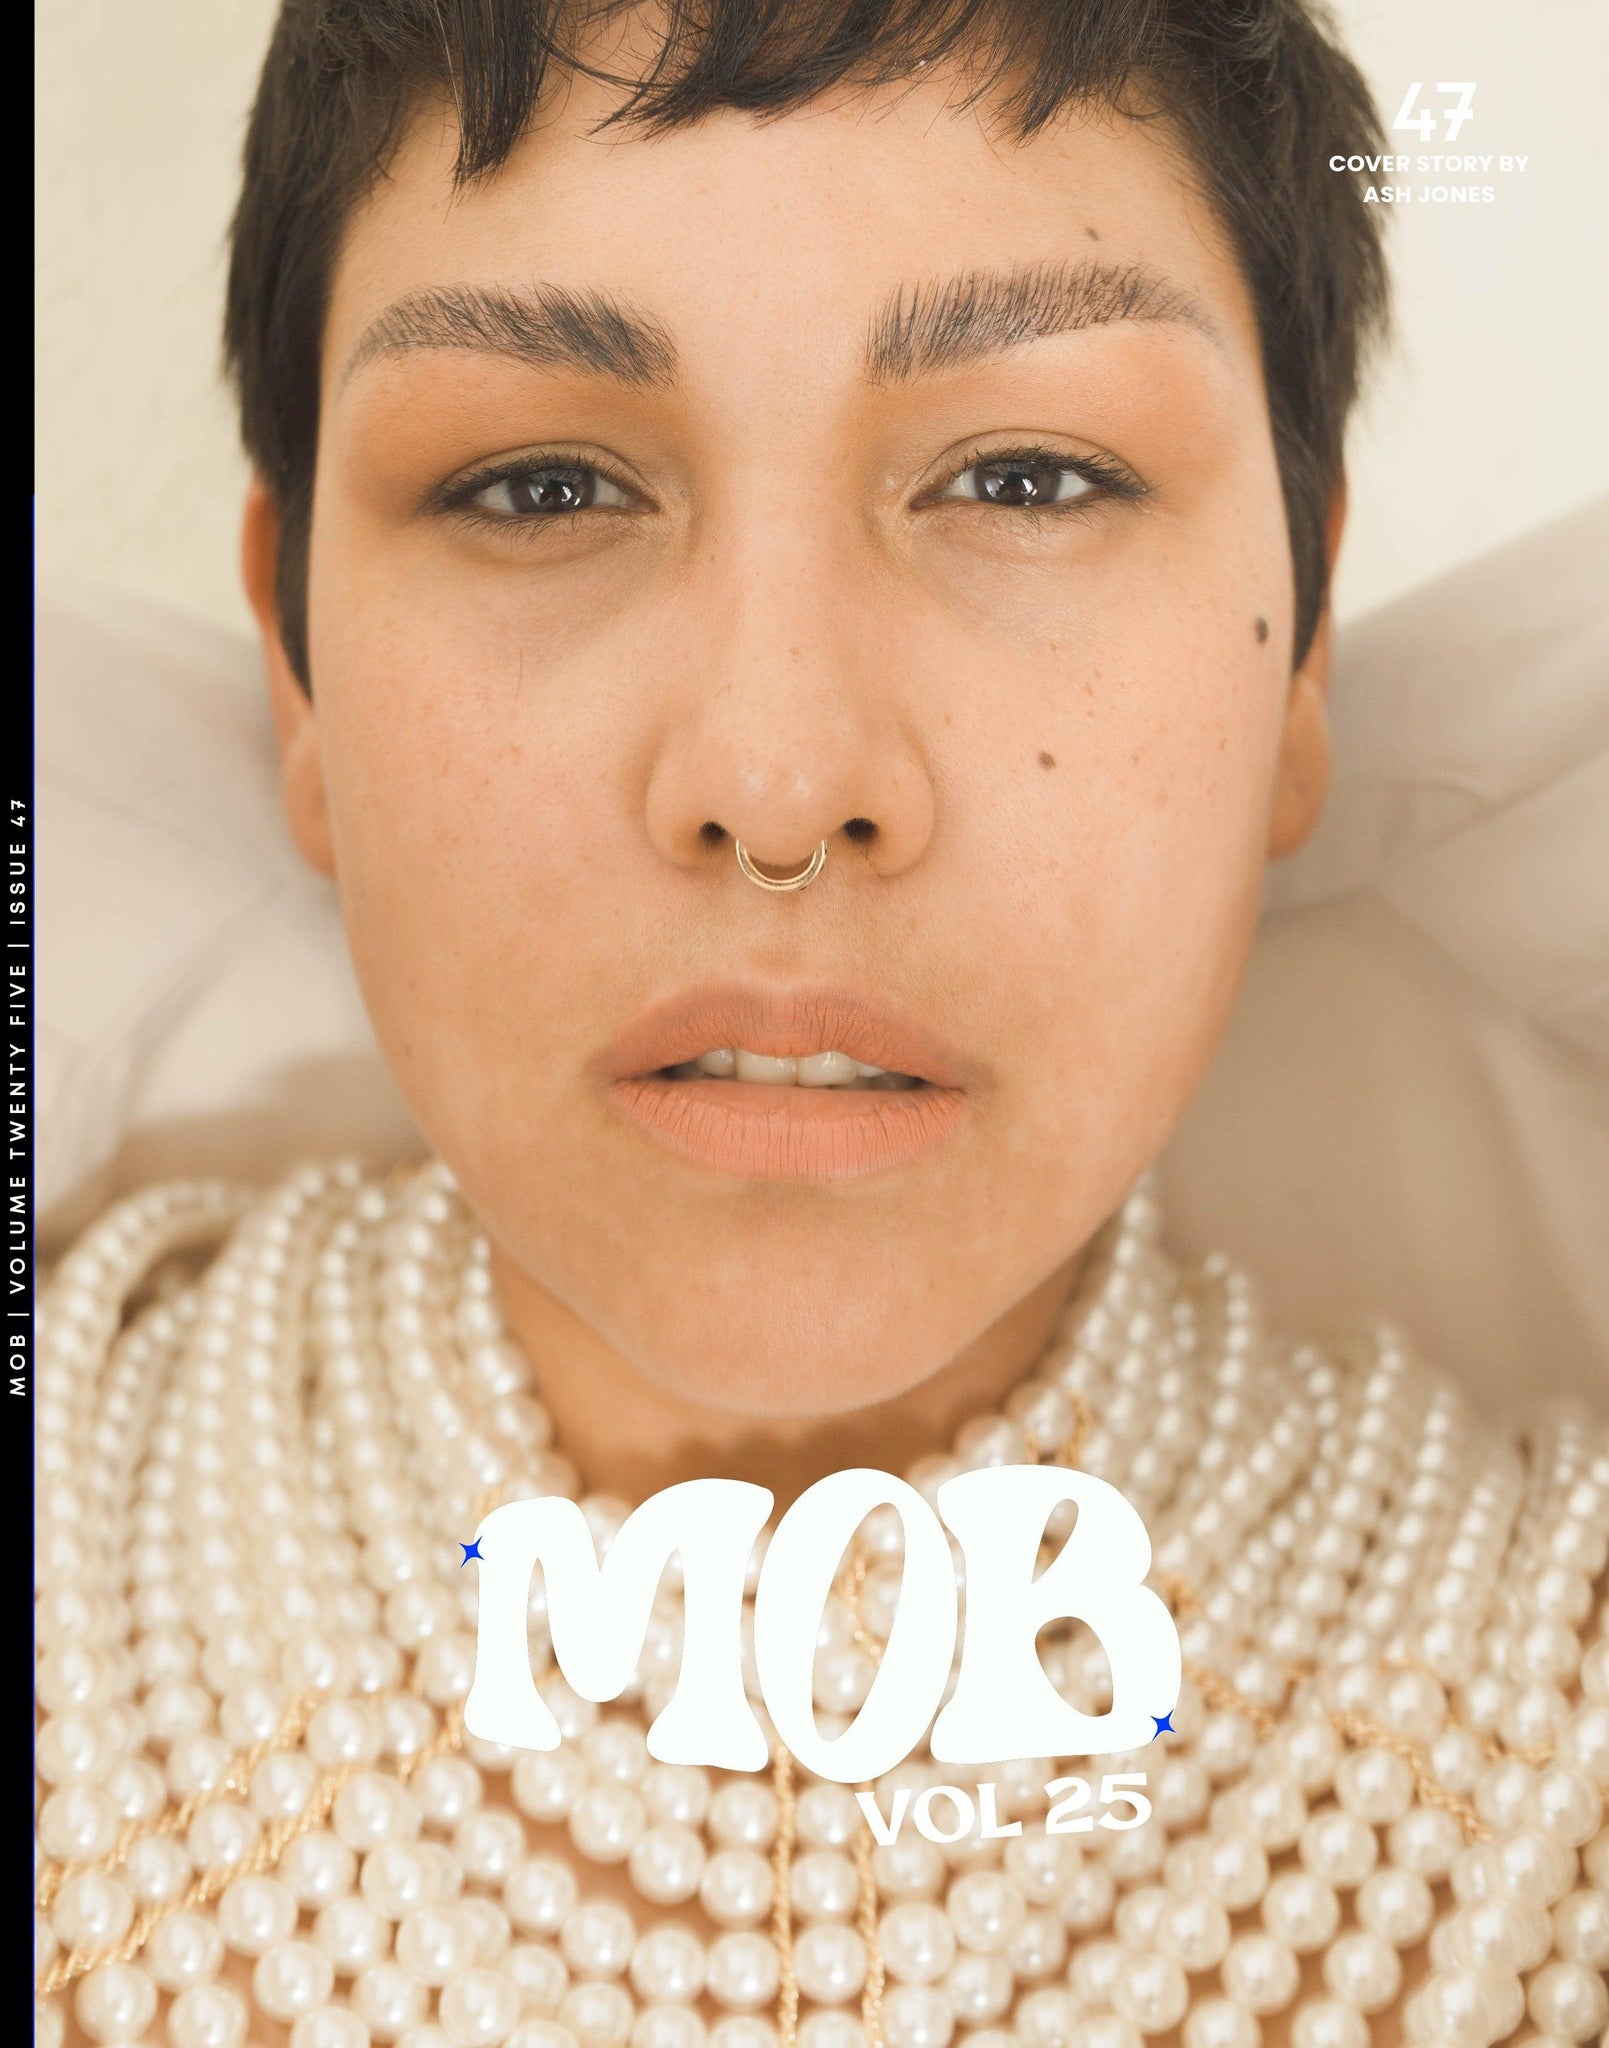 MOB JOURNAL | VOLUME TWENTY FIVE | ISSUE #47 - Mob Journal